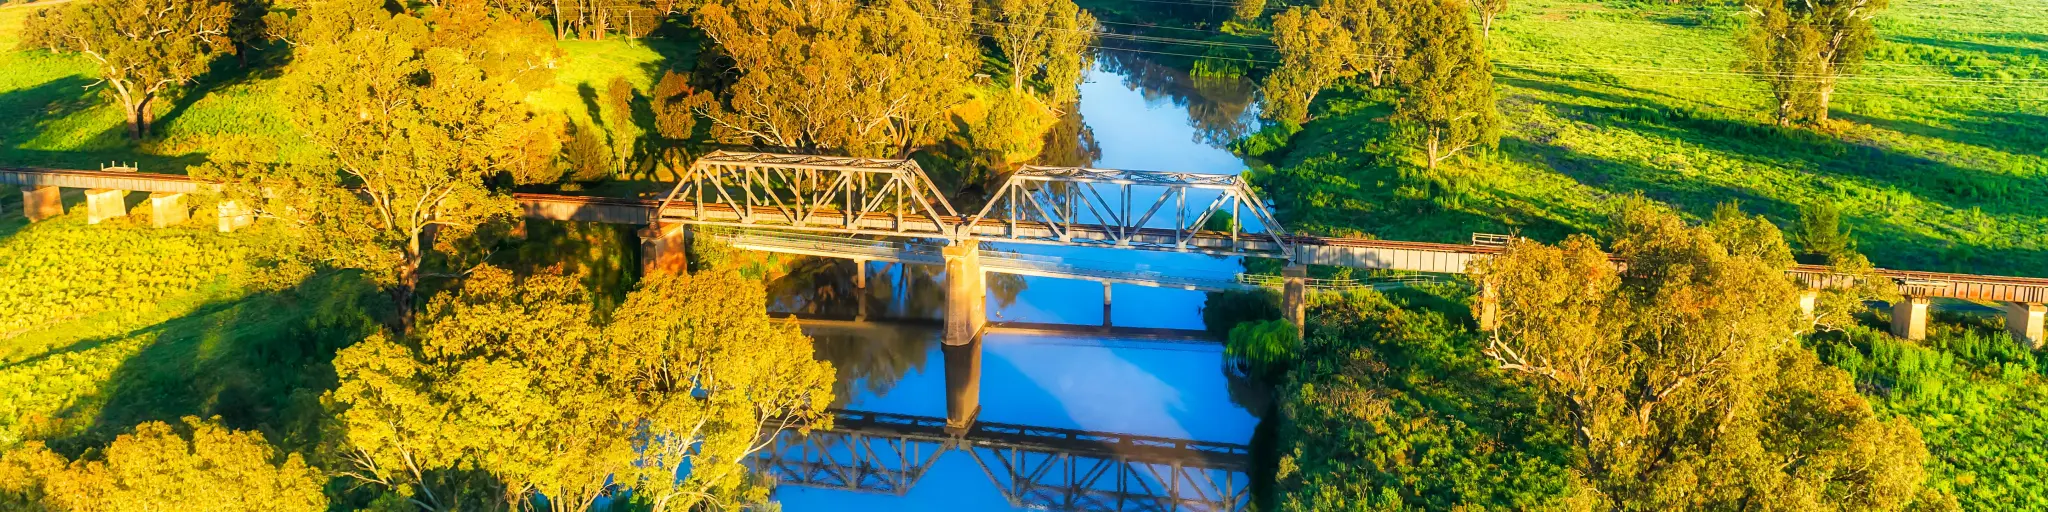 Scenic aerial view of the historic steel railway bridge across Macquarie River in Dubbo, autumn colors